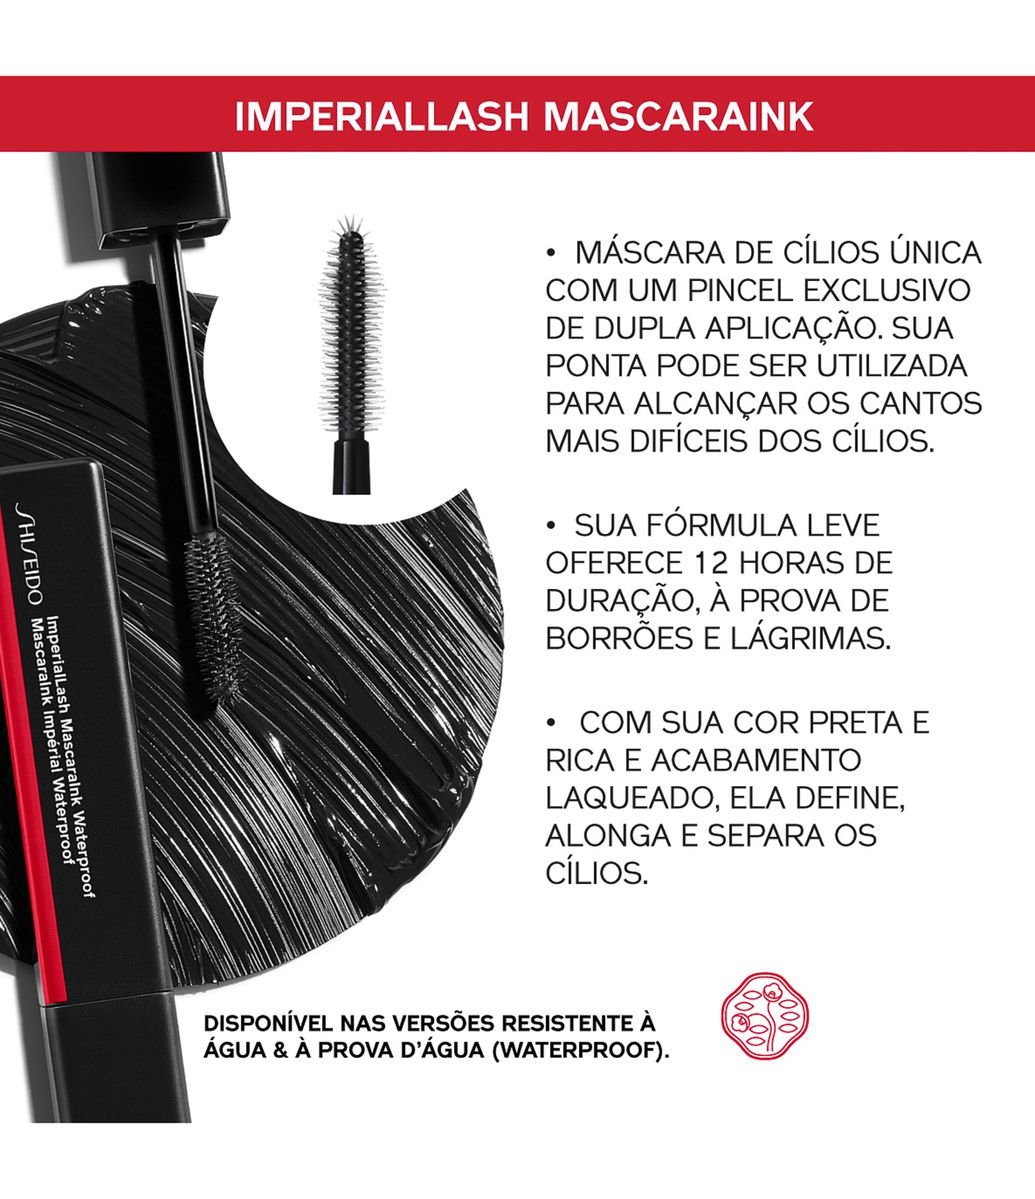 Black Imperiallash Cílios D\'água Prova A Shiseido 01 De Mascaraink Máscara